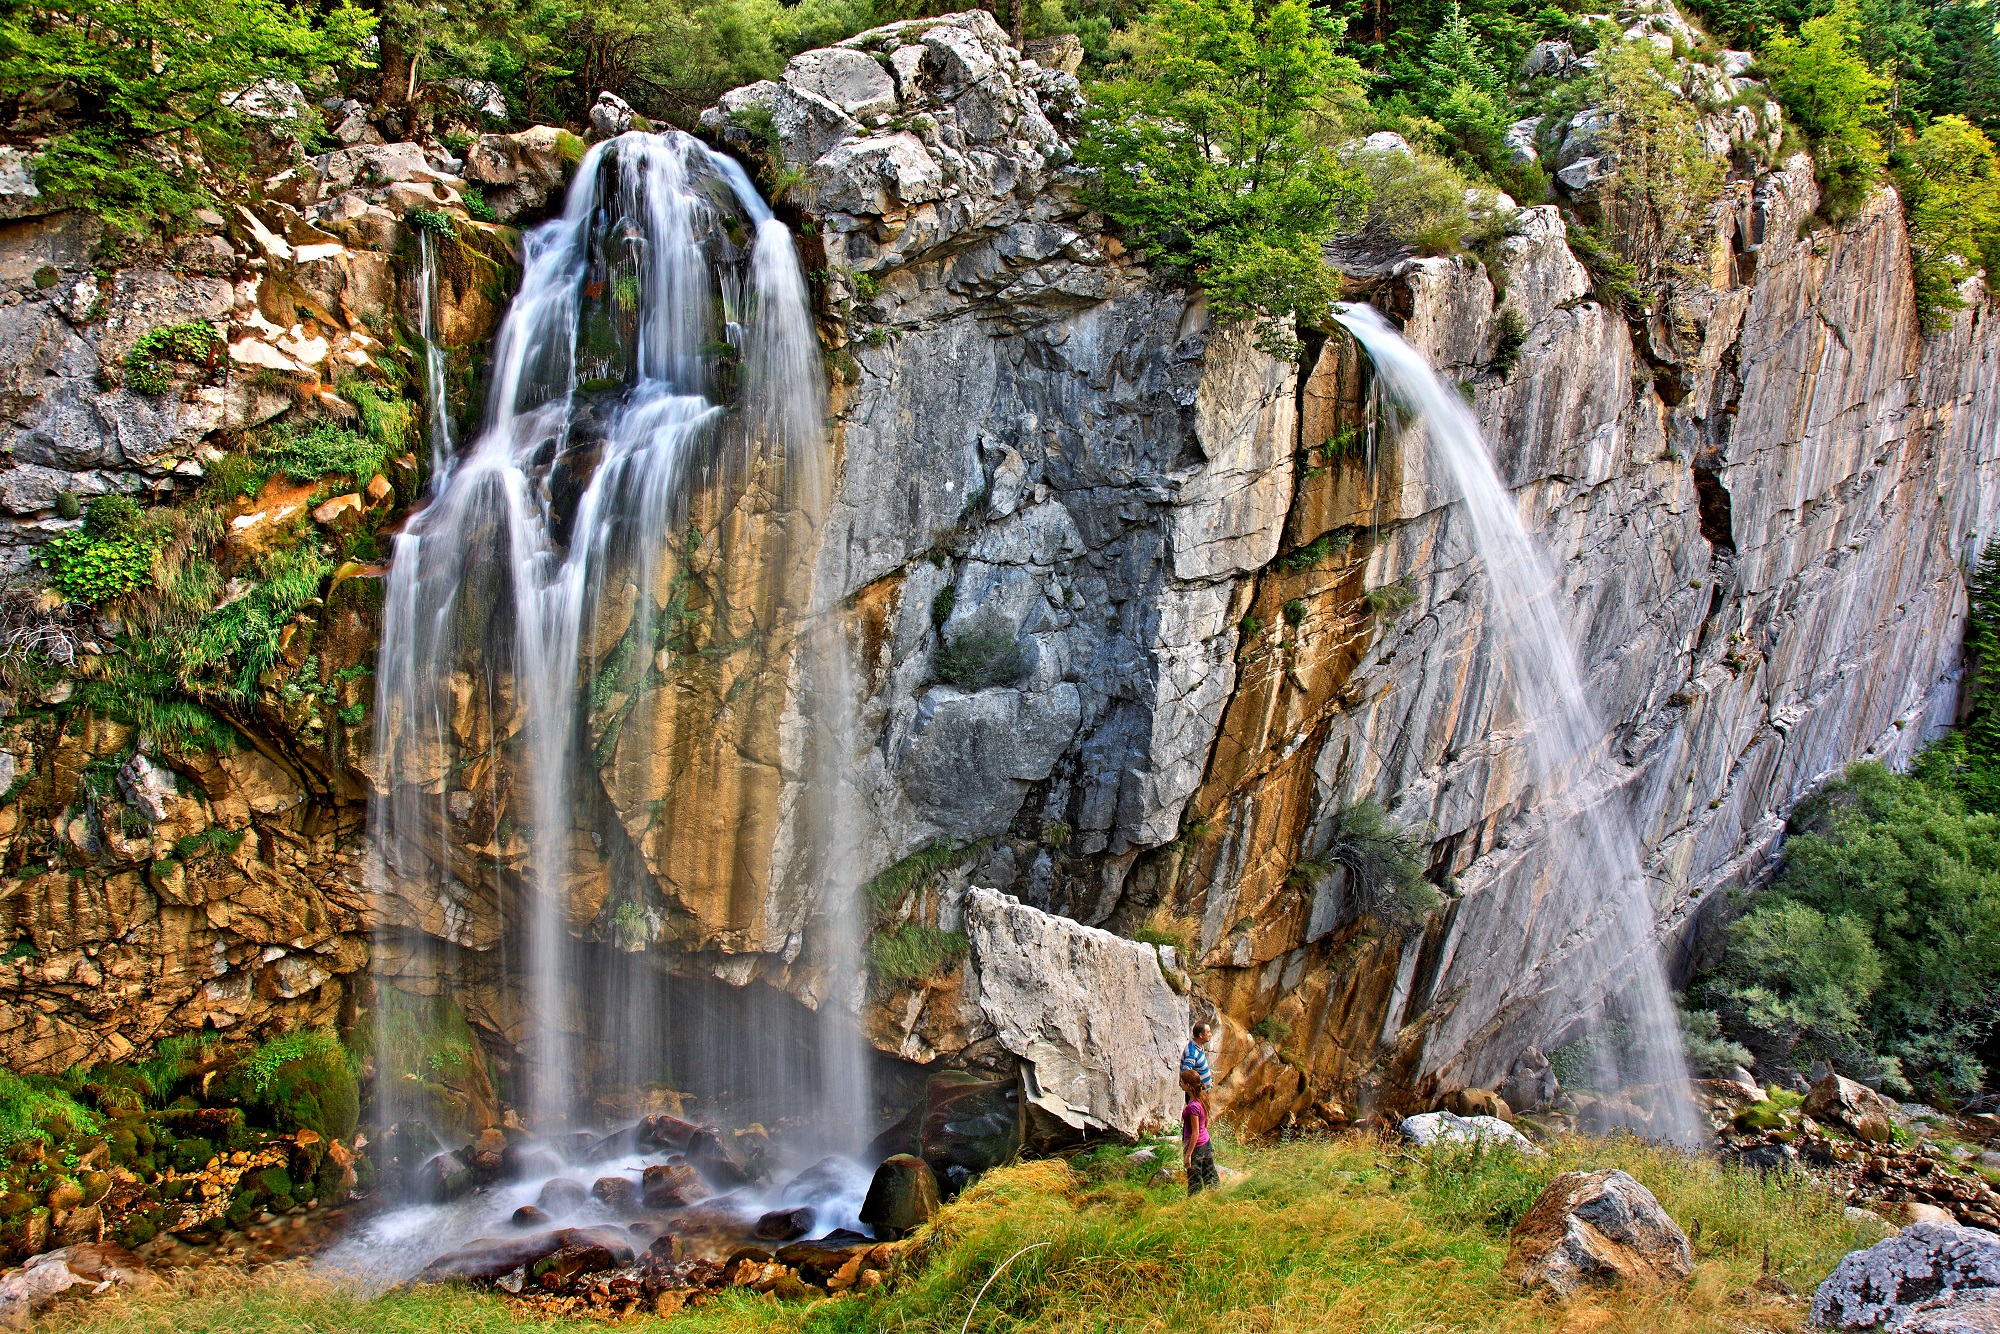 The double waterfalls of Souda in Theodoriana / Shutterstock